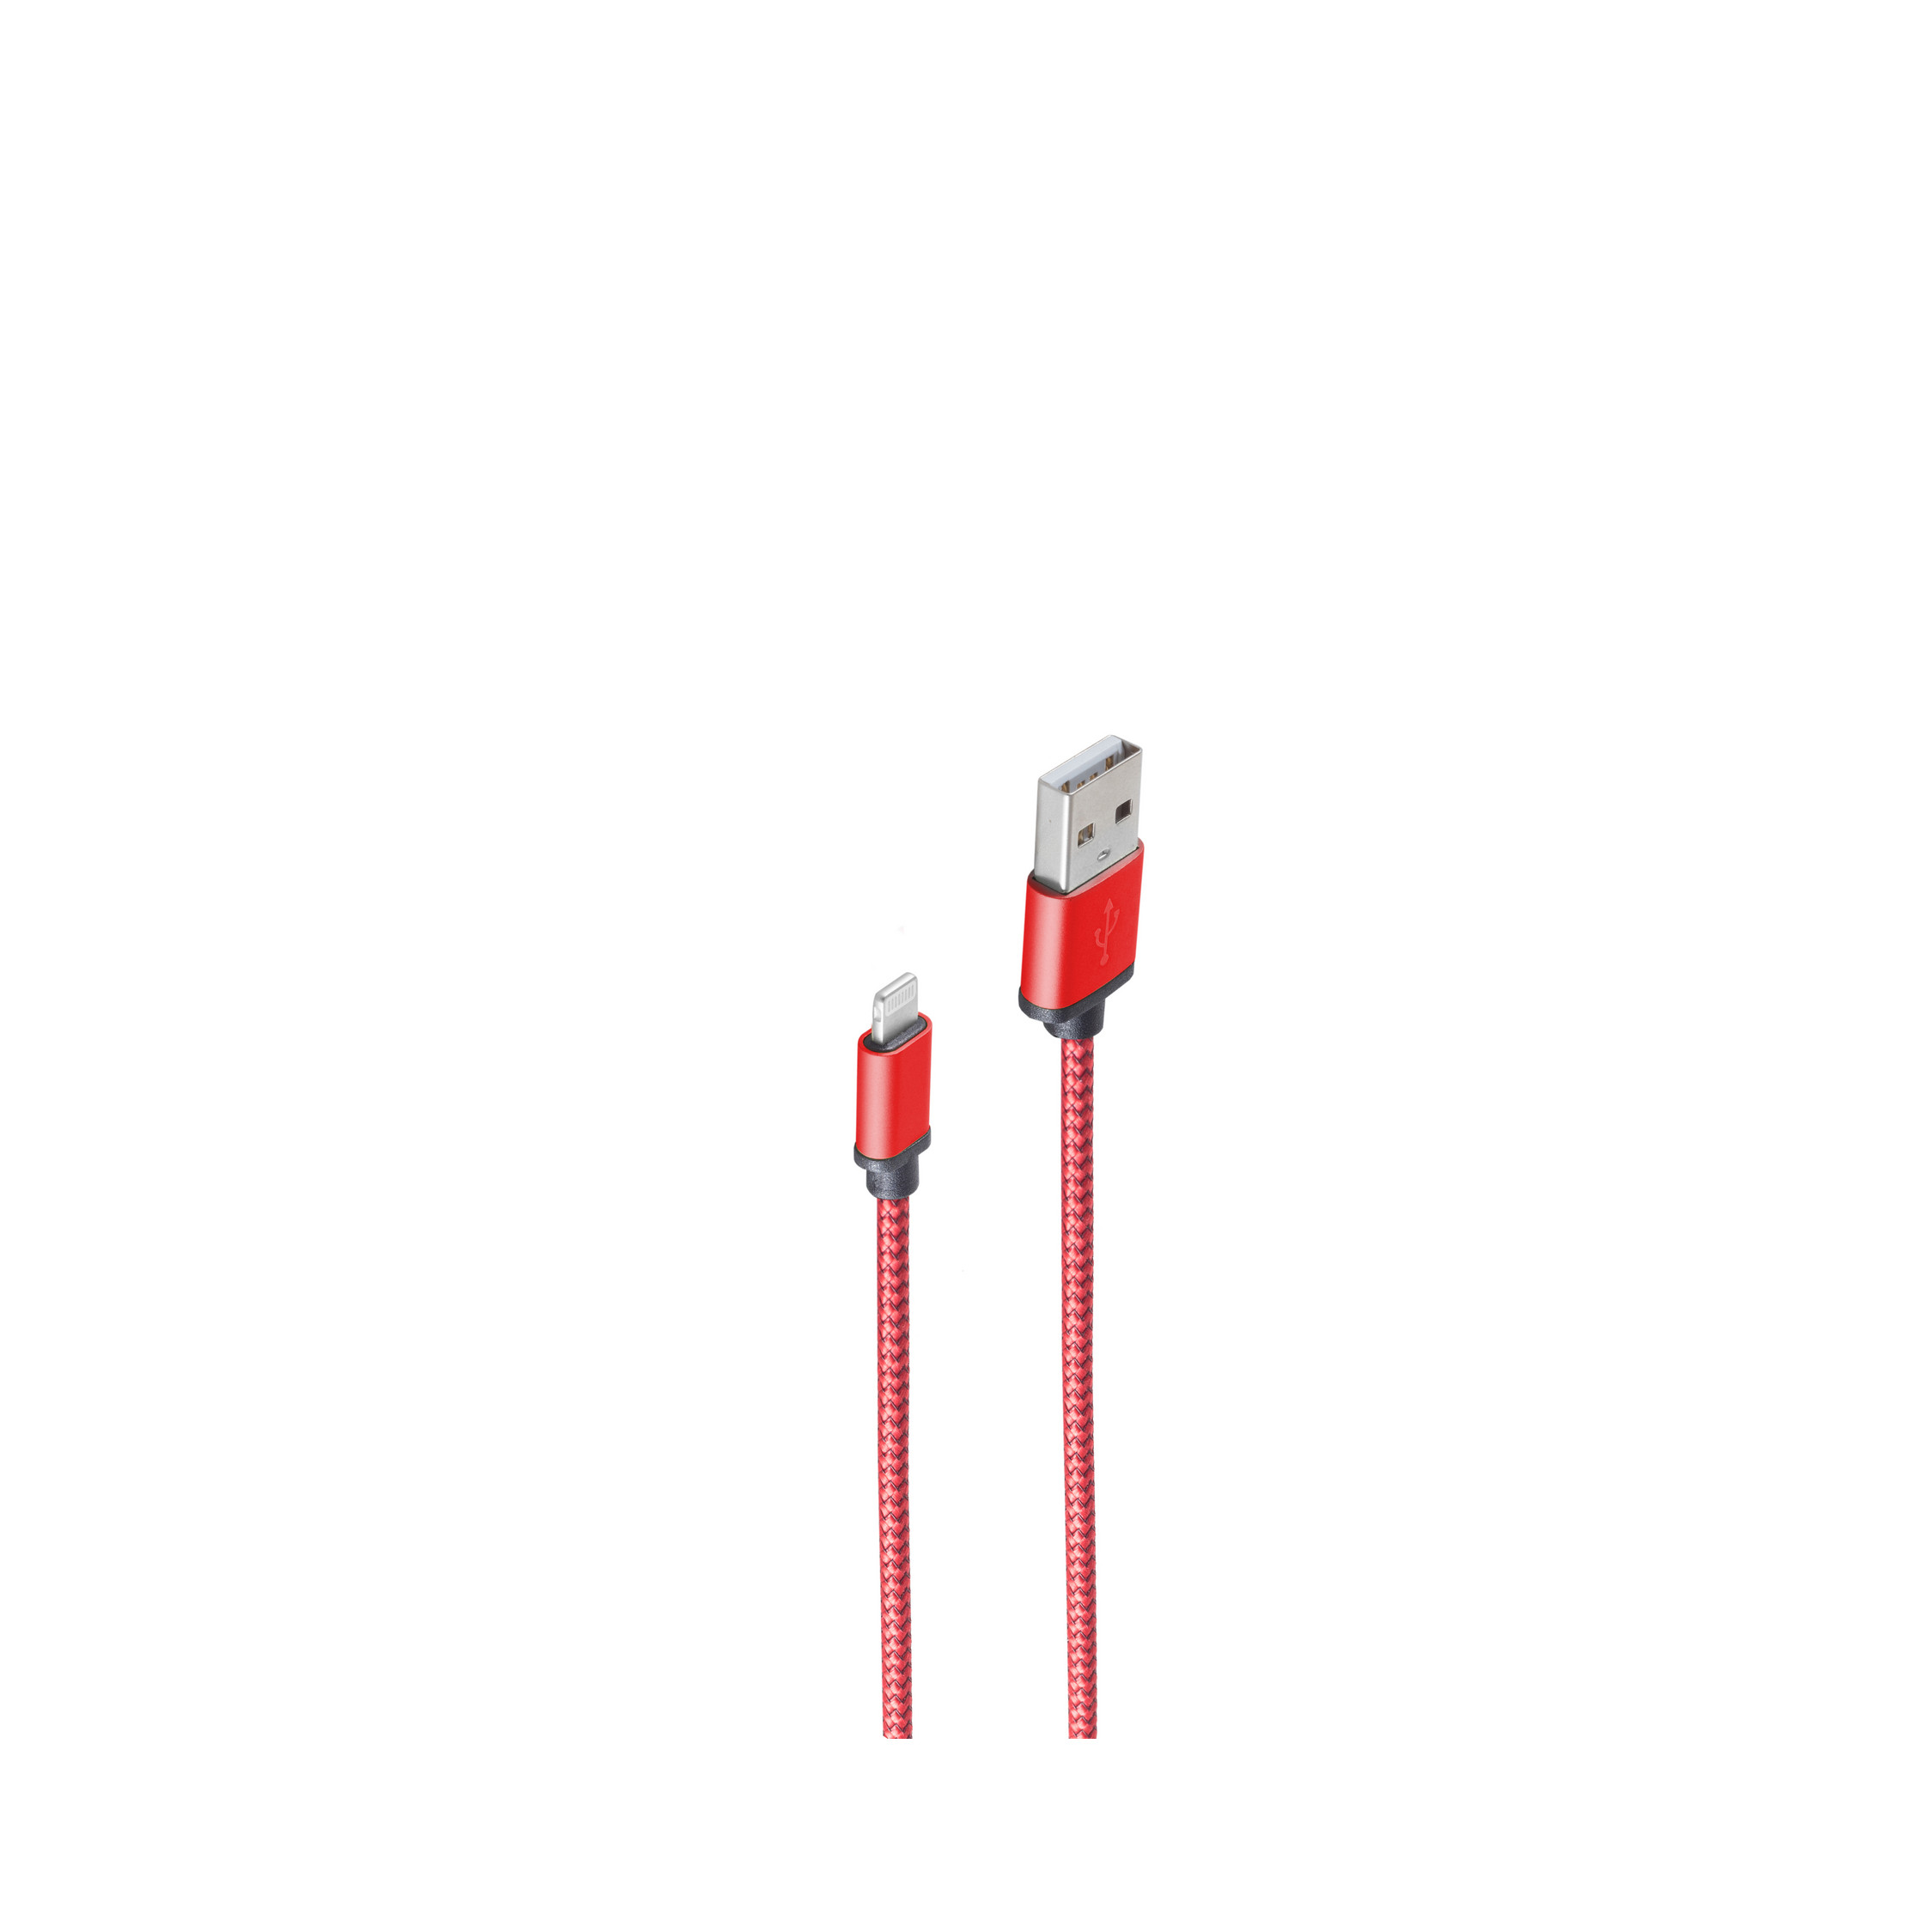 rot auf A Ladekabel, Stecker m, USB-Ladekabel rot, USB Stecker 2m, 2 8-pin SHIVERPEAKS